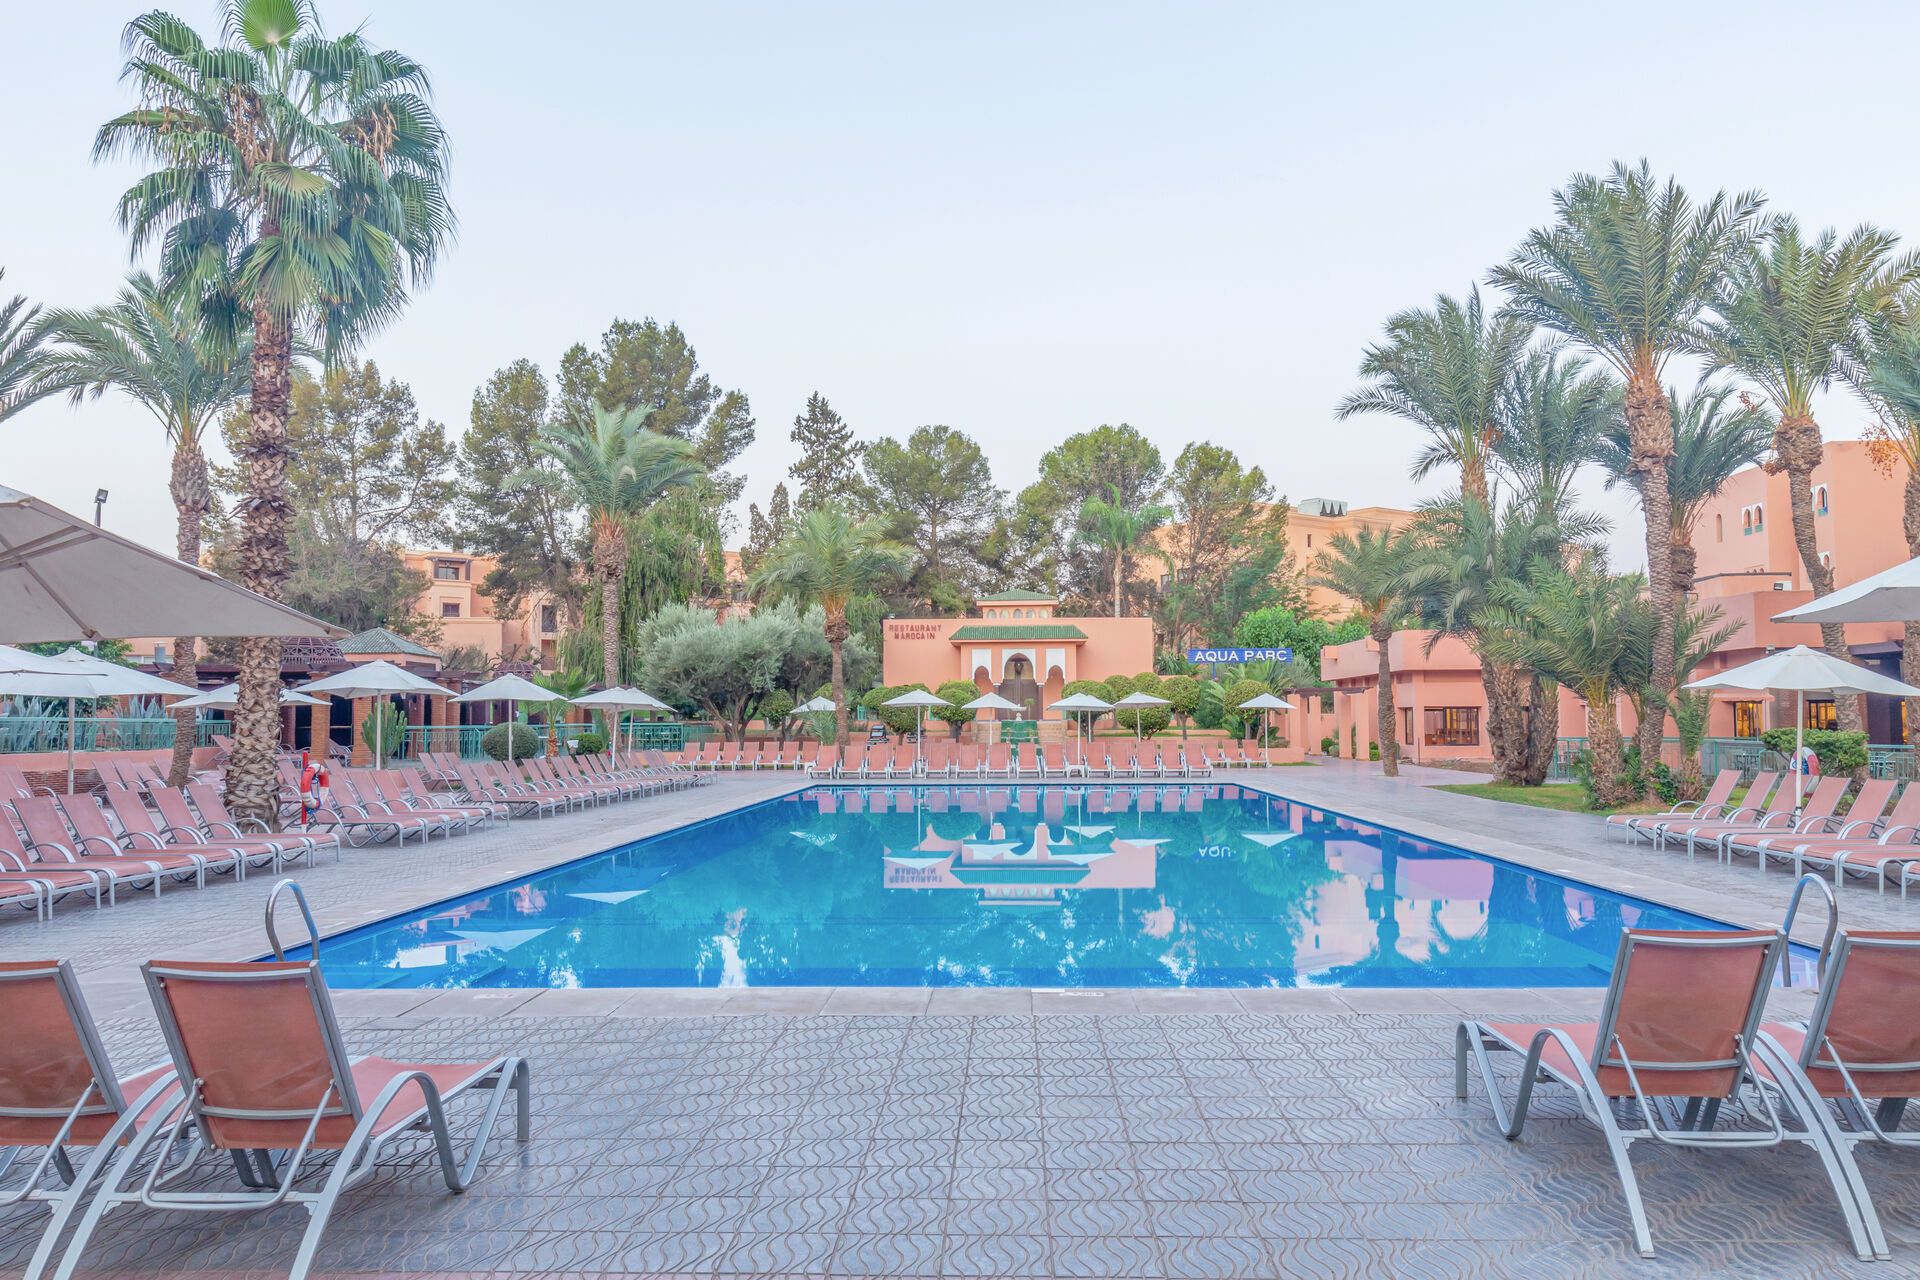 Maroc - Marrakech - Hotel Club and Spa Marrakech 4*